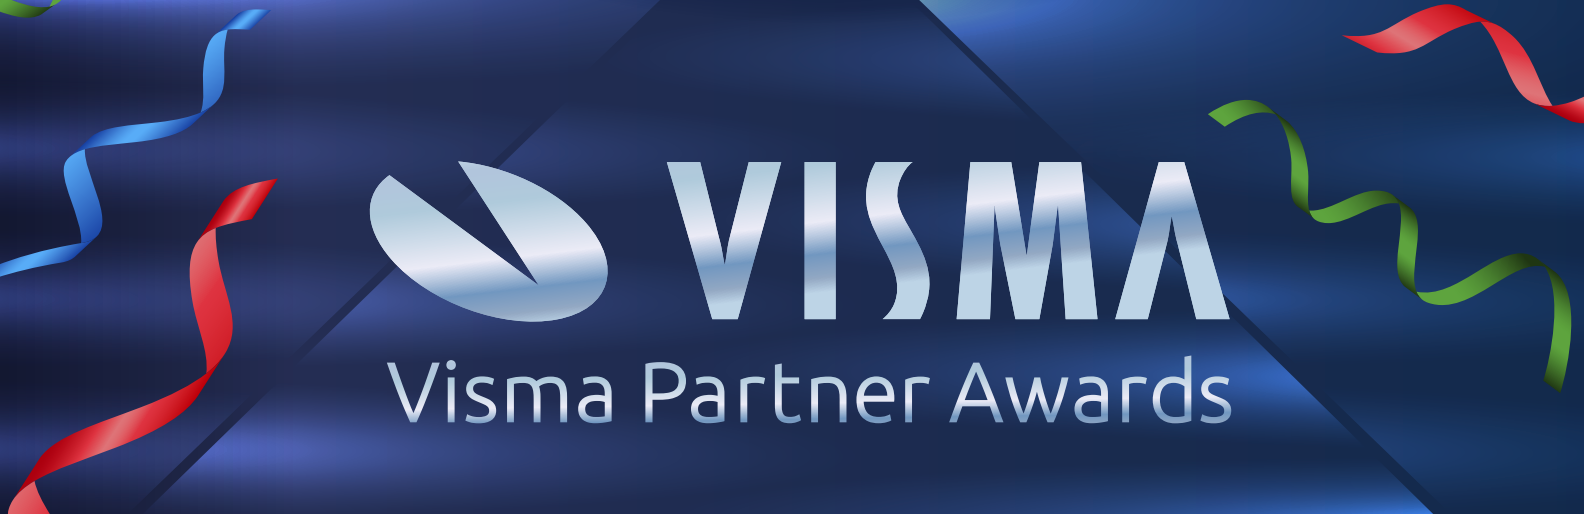 Visma Partner Awards 2021-1584x514px.pdf.png